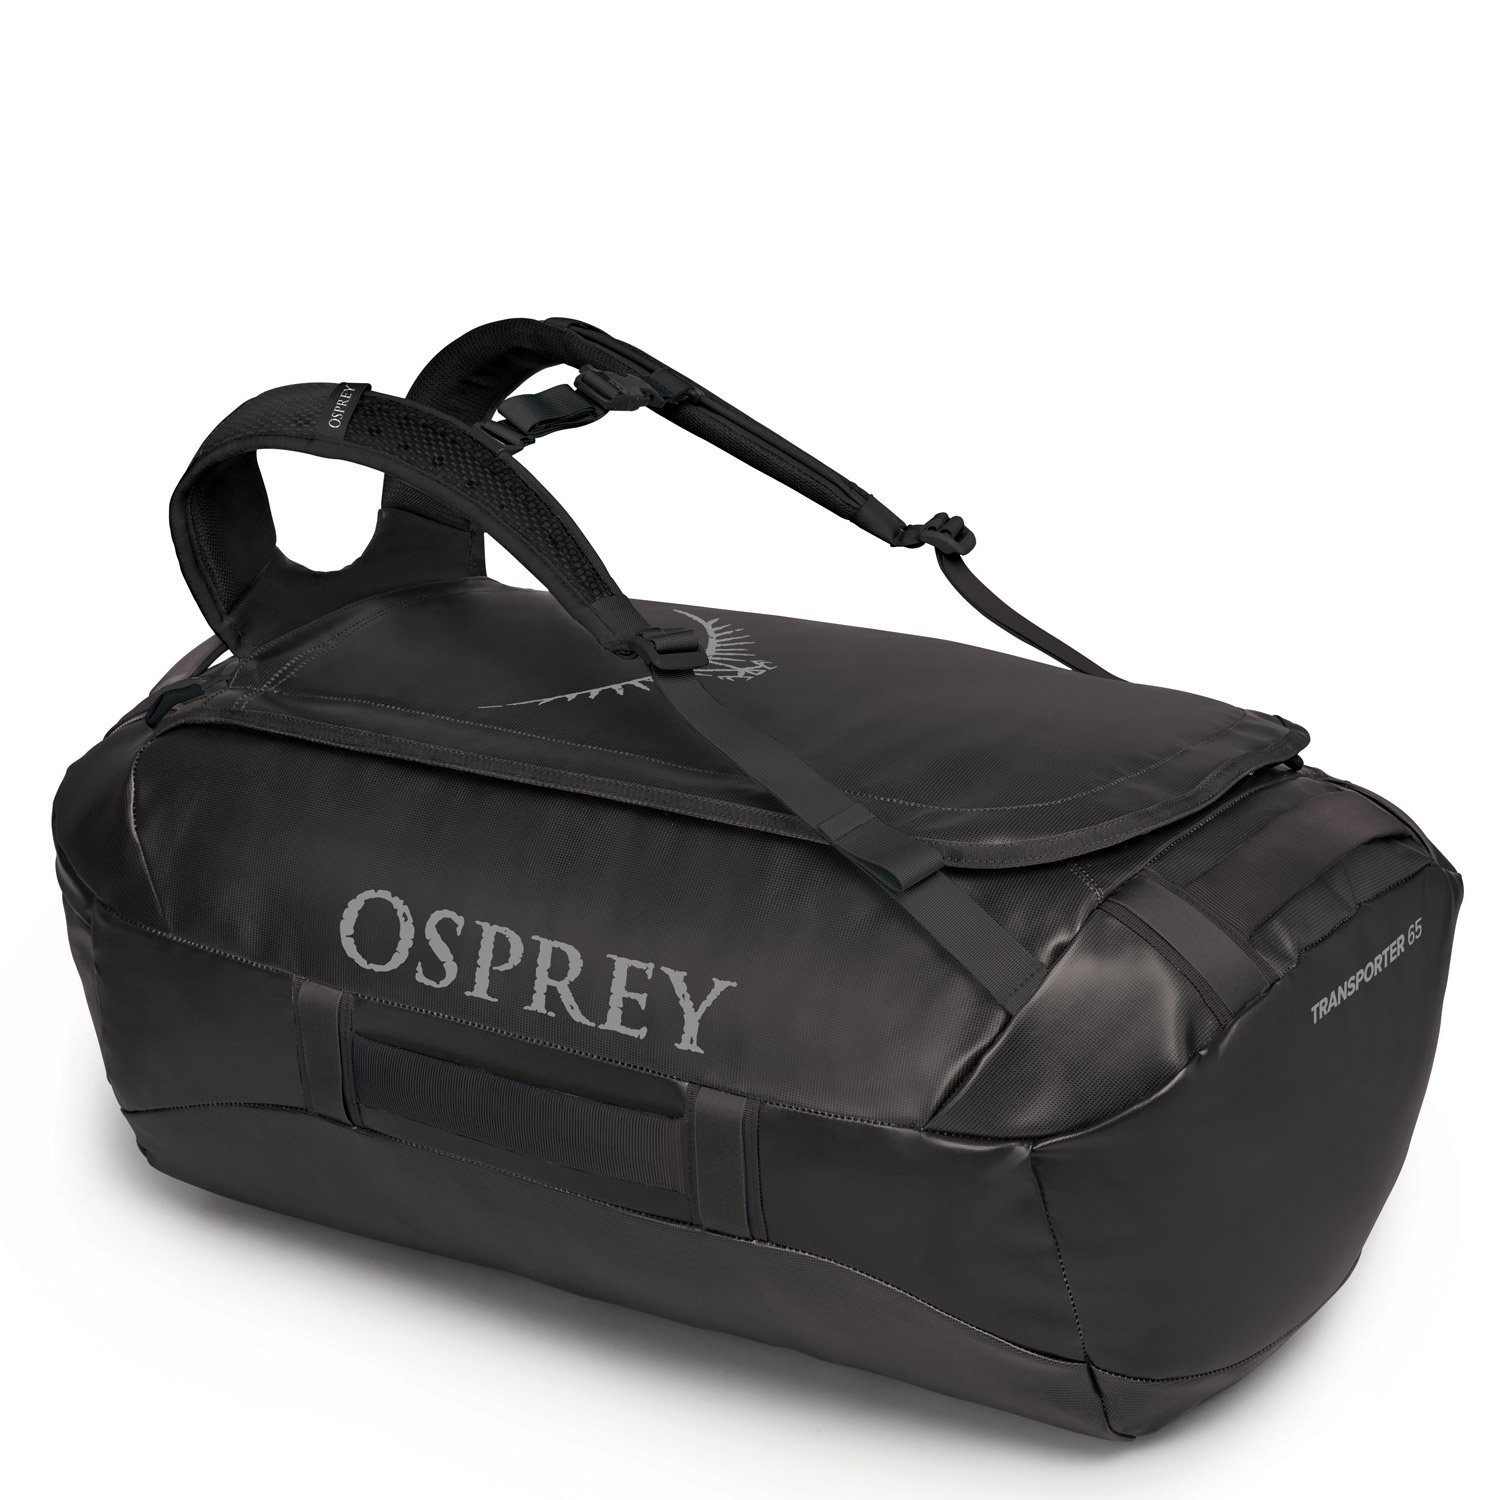 Osprey Rucksack OSPREY Reisetasche/Rucksack Transporter Black Stück) (Stück, 65